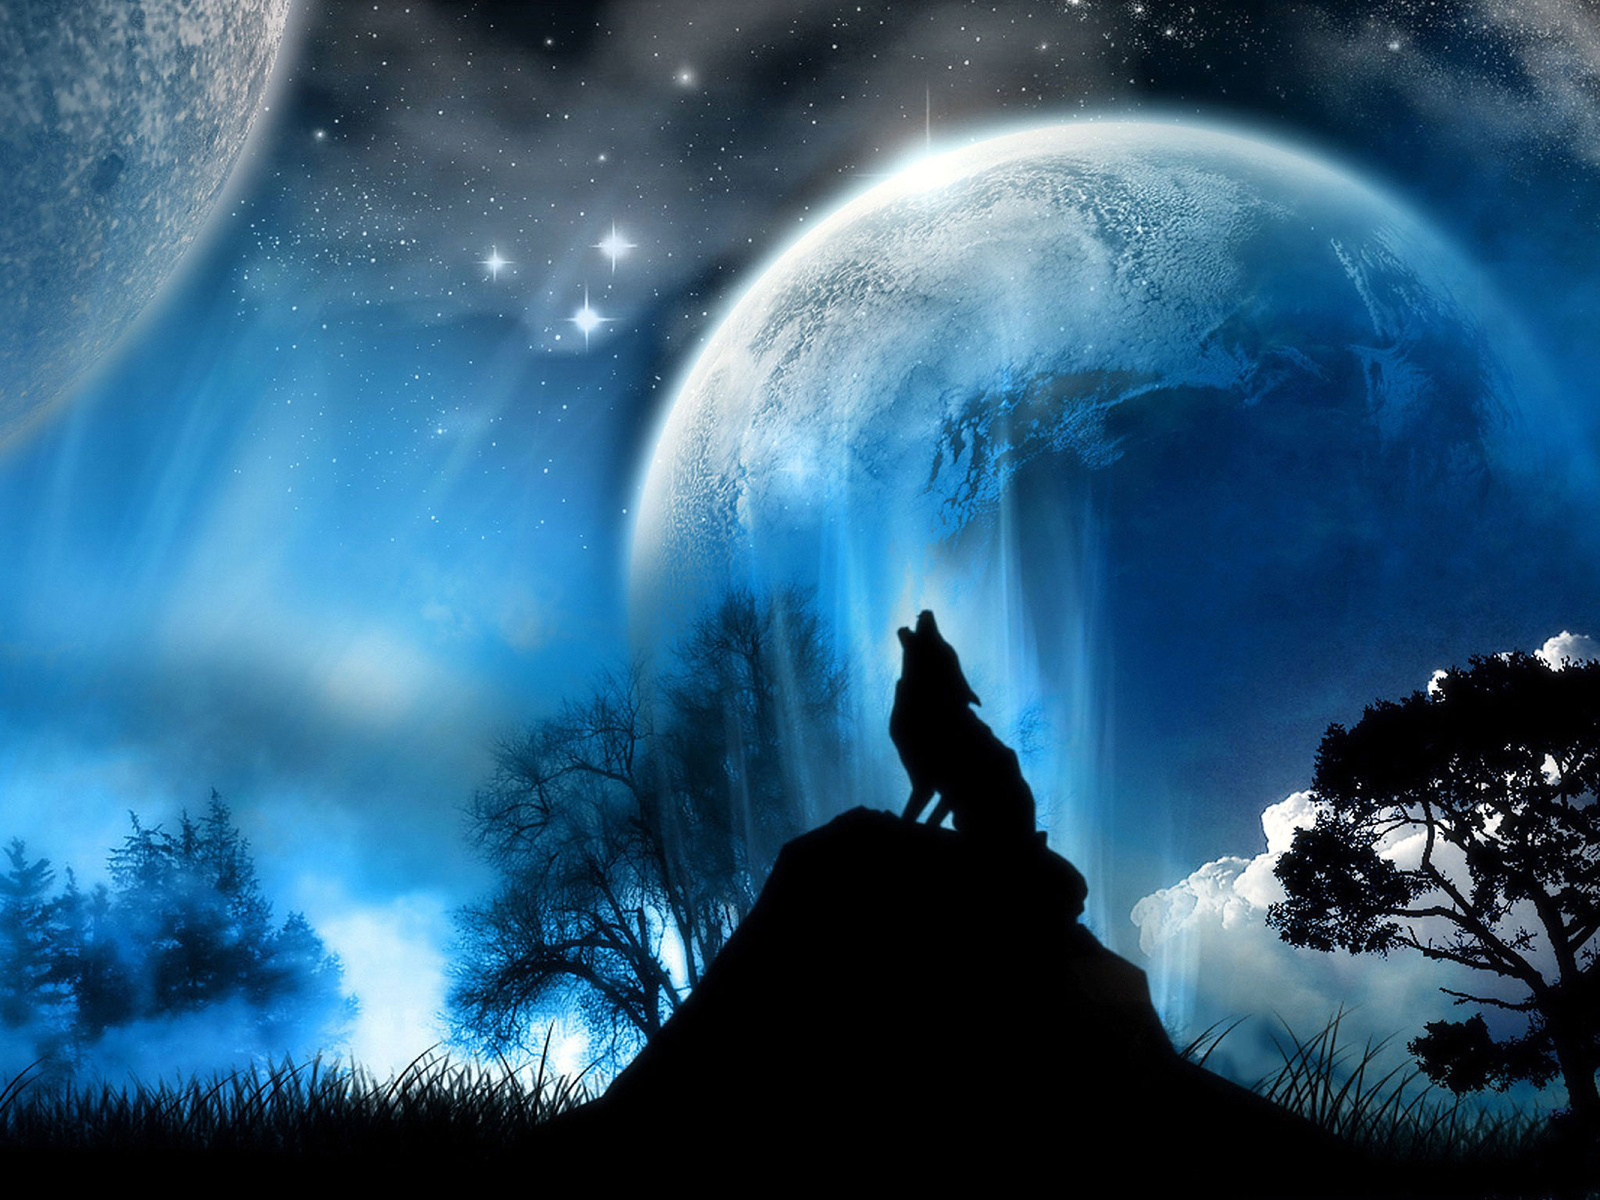 wolfs, planets, animals, landscape, sky, blue